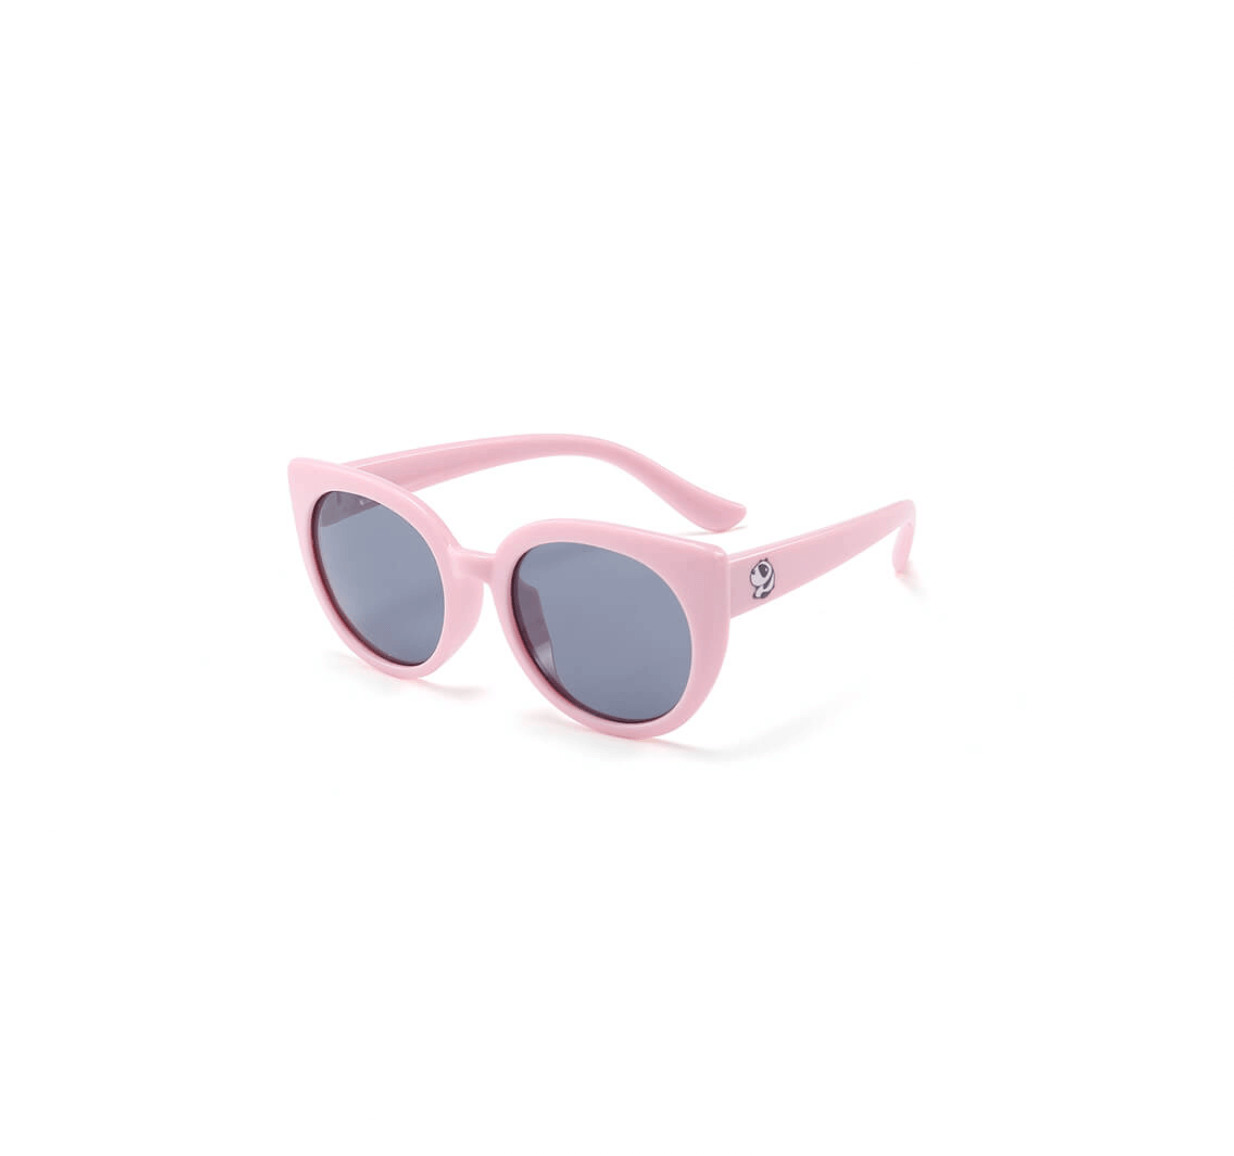 Custom Polarized Sunglasses, pink girls sunglasses, custom logo polarized sunglasses, design your own sunglasses with logo, custom sunglasses manufacturers China, eyeglasses supplier